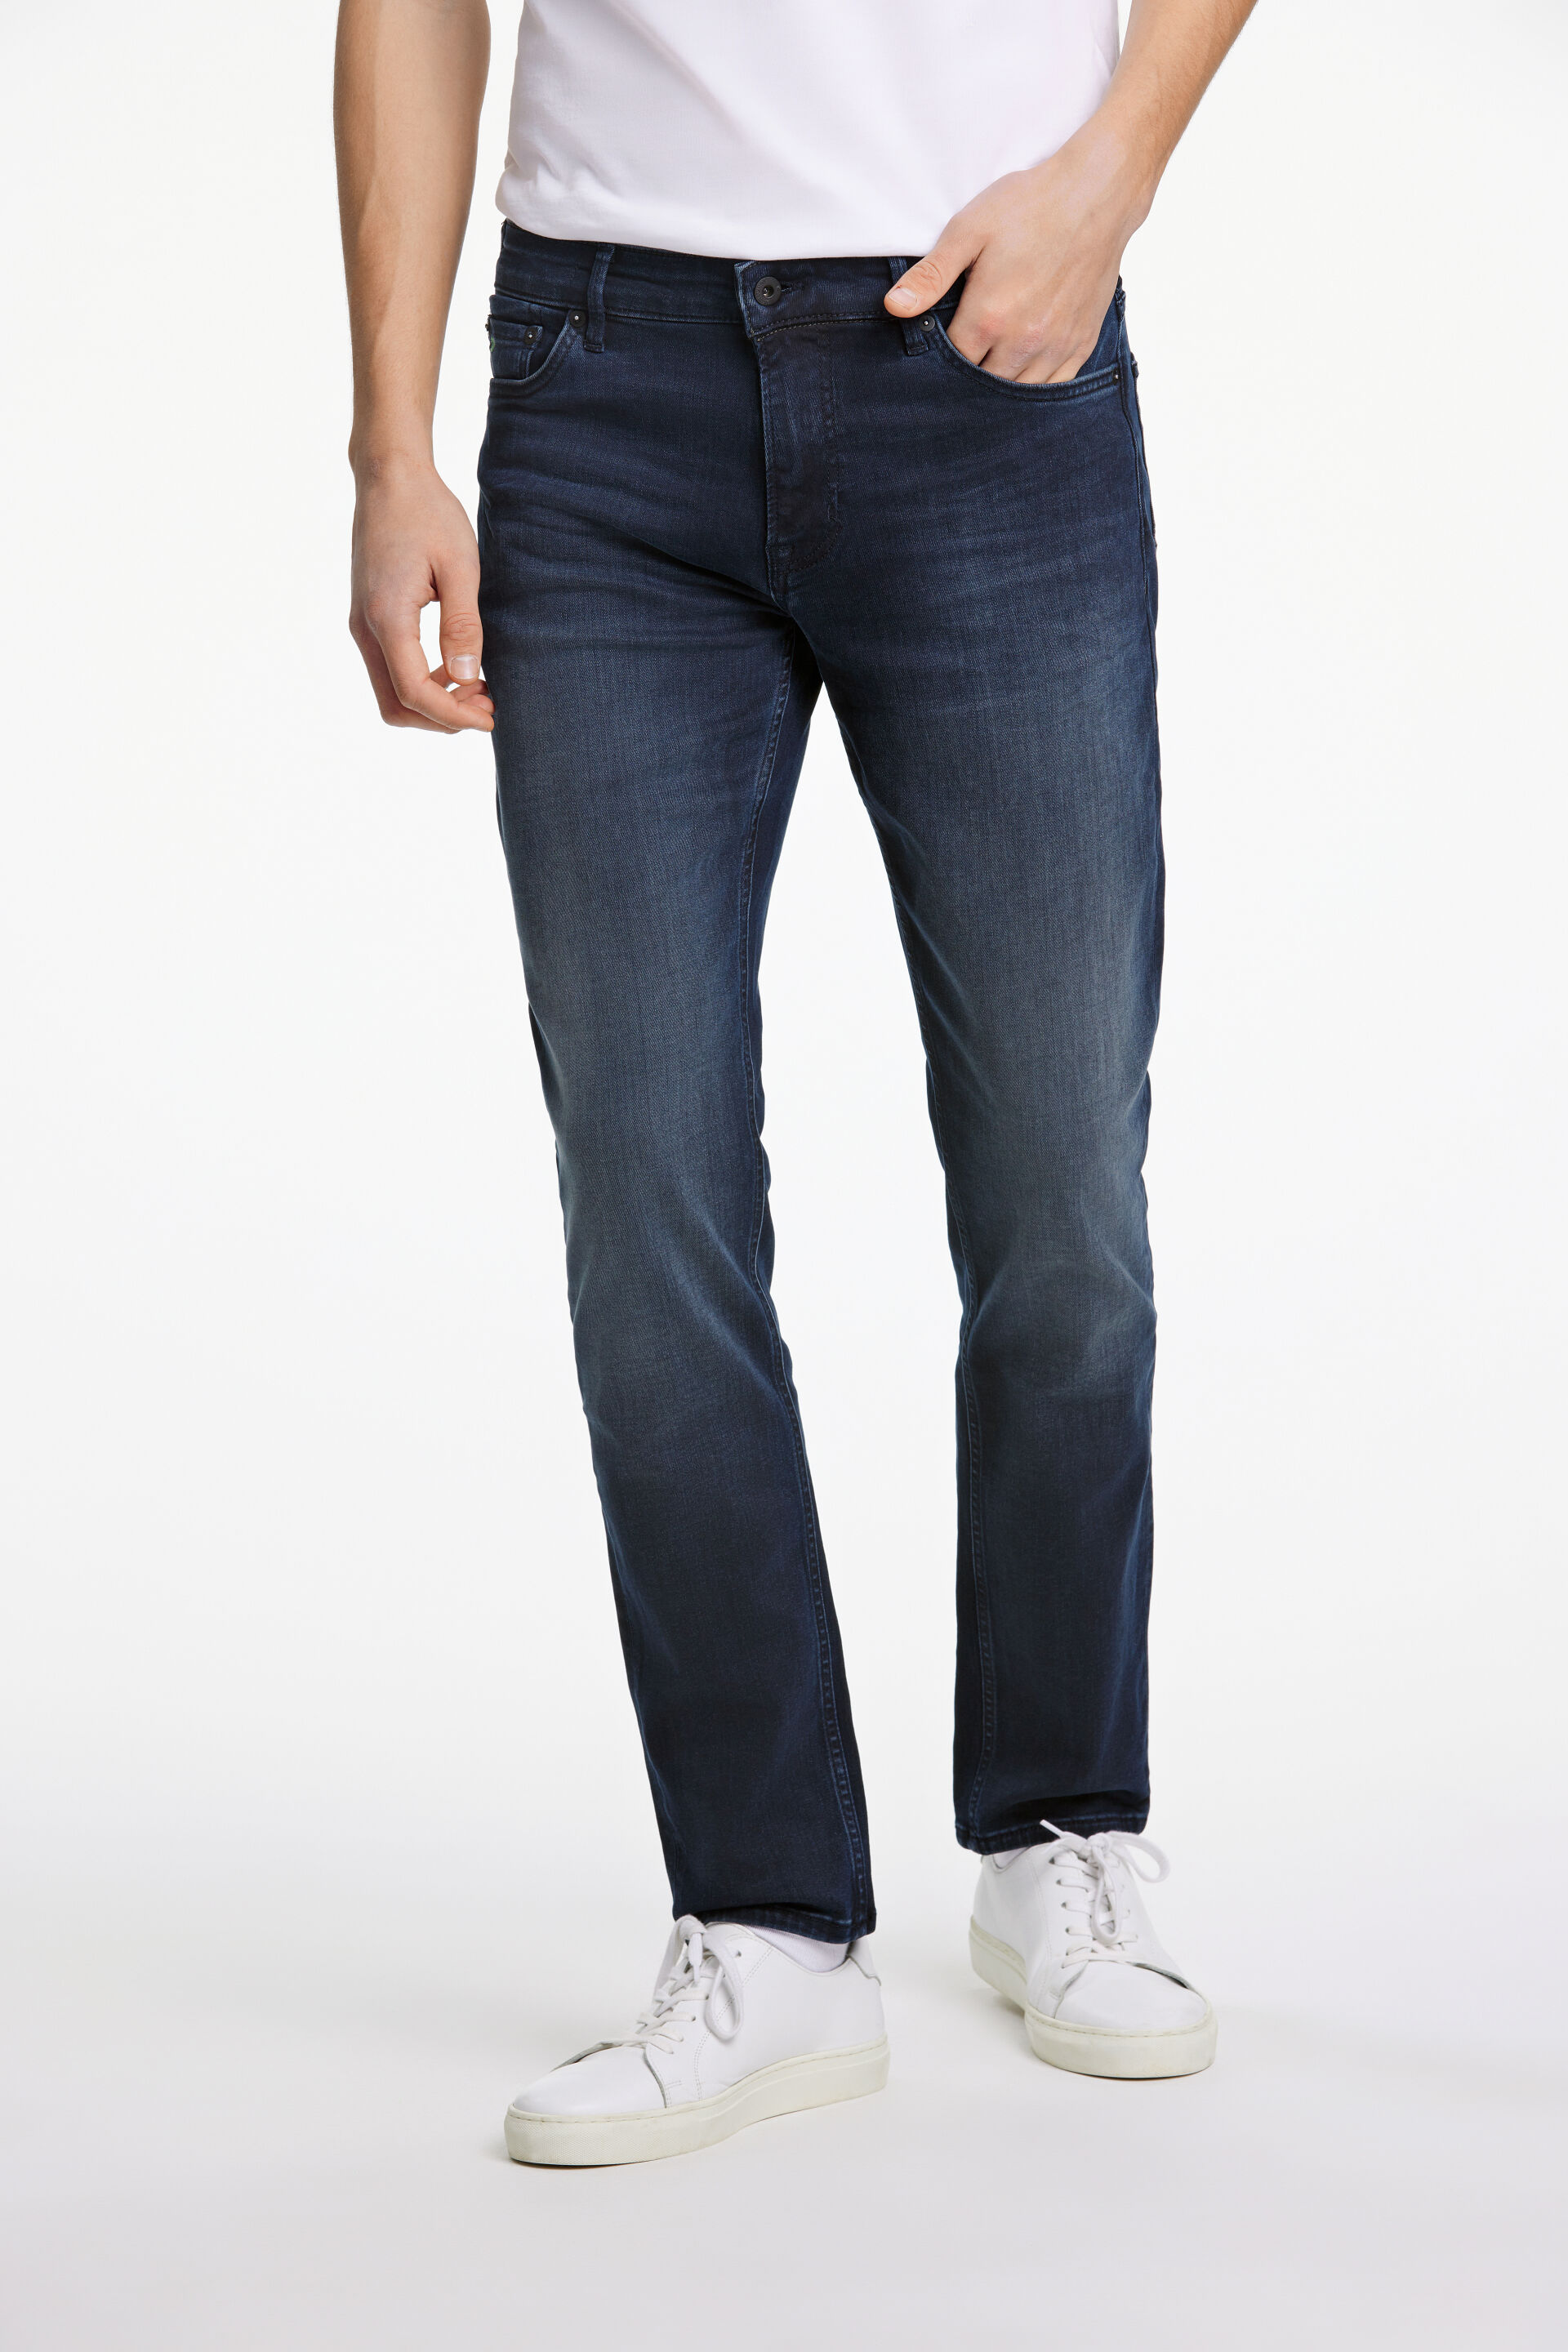 Junk de Luxe  Jeans Blå 60-025011